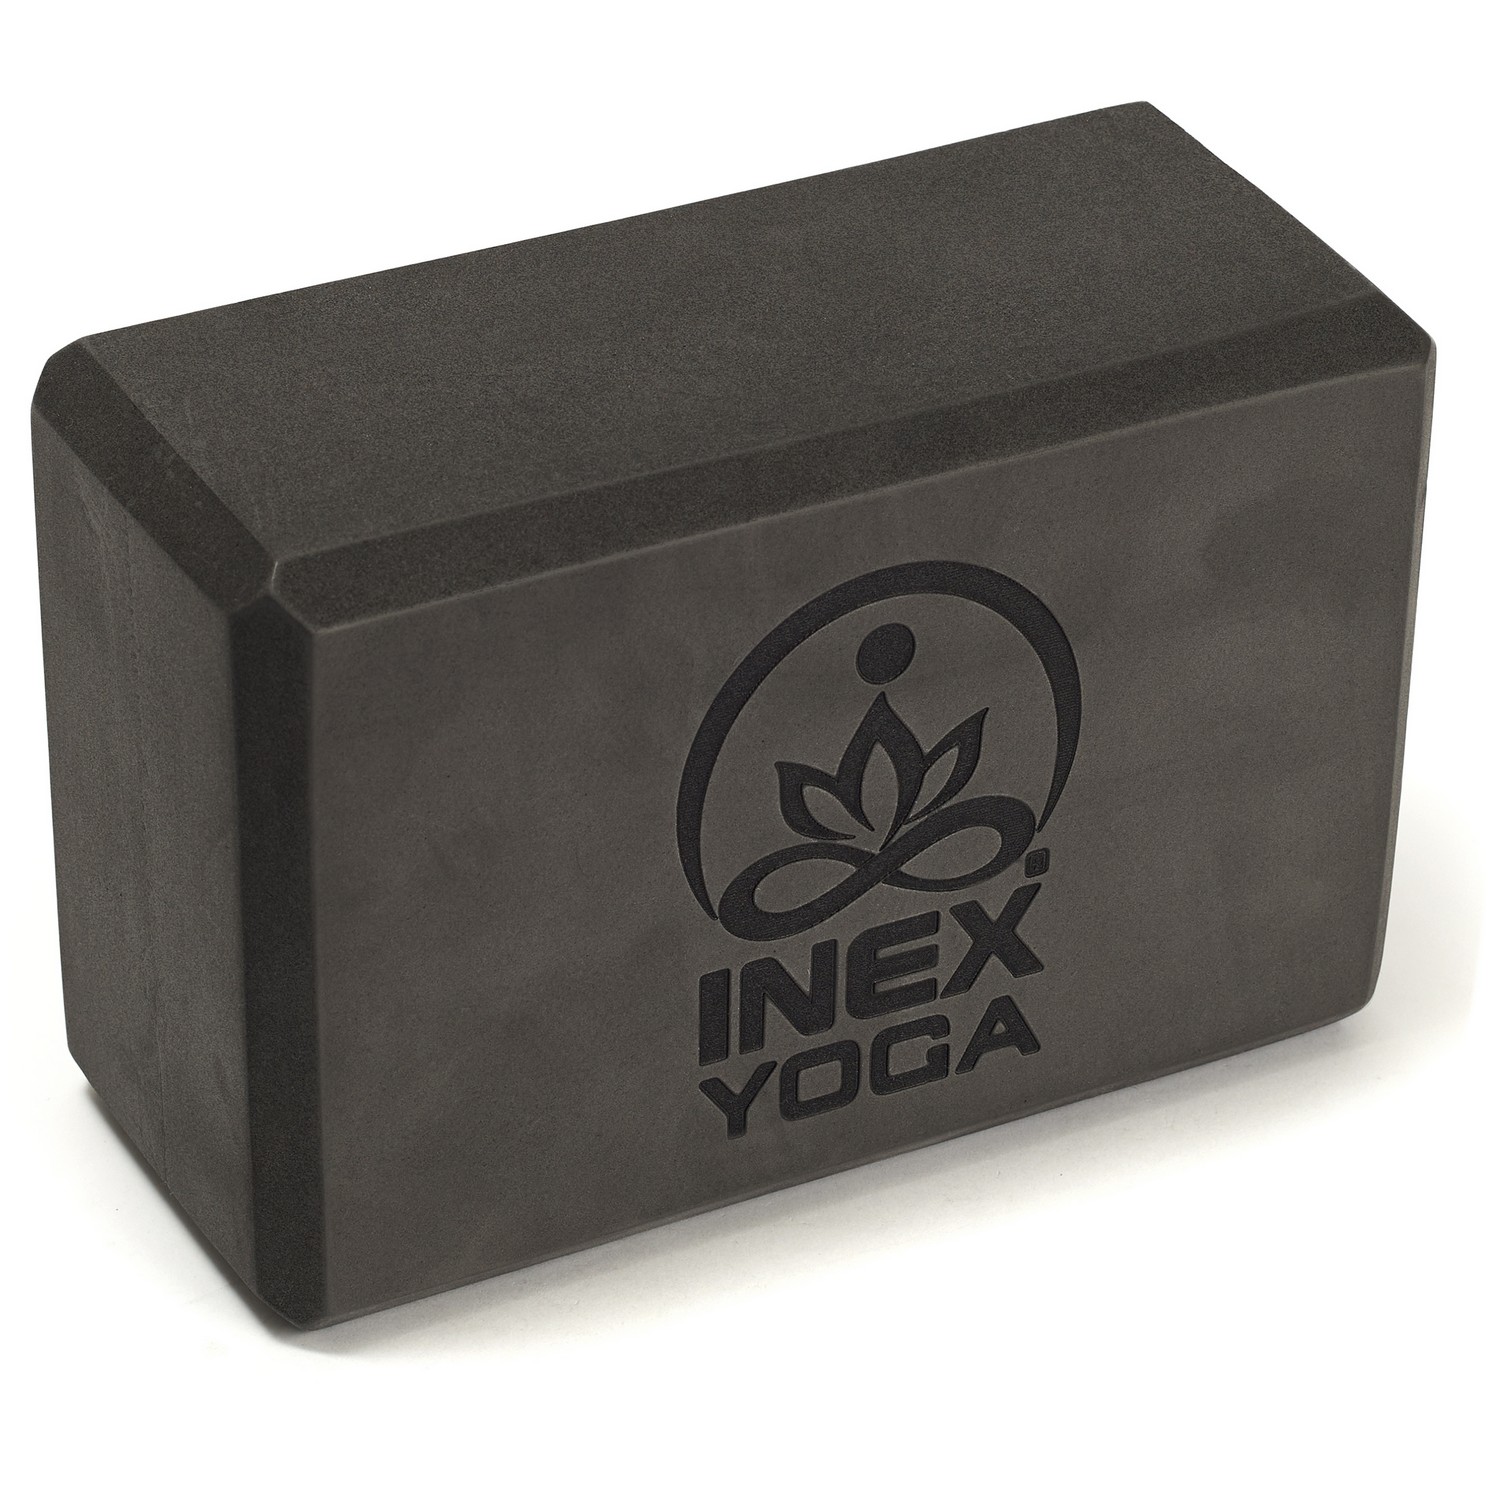 Блок для йоги Inex EVA Yoga Block YGBK-CG 23x15x10 см, темно-серый 1500_1500